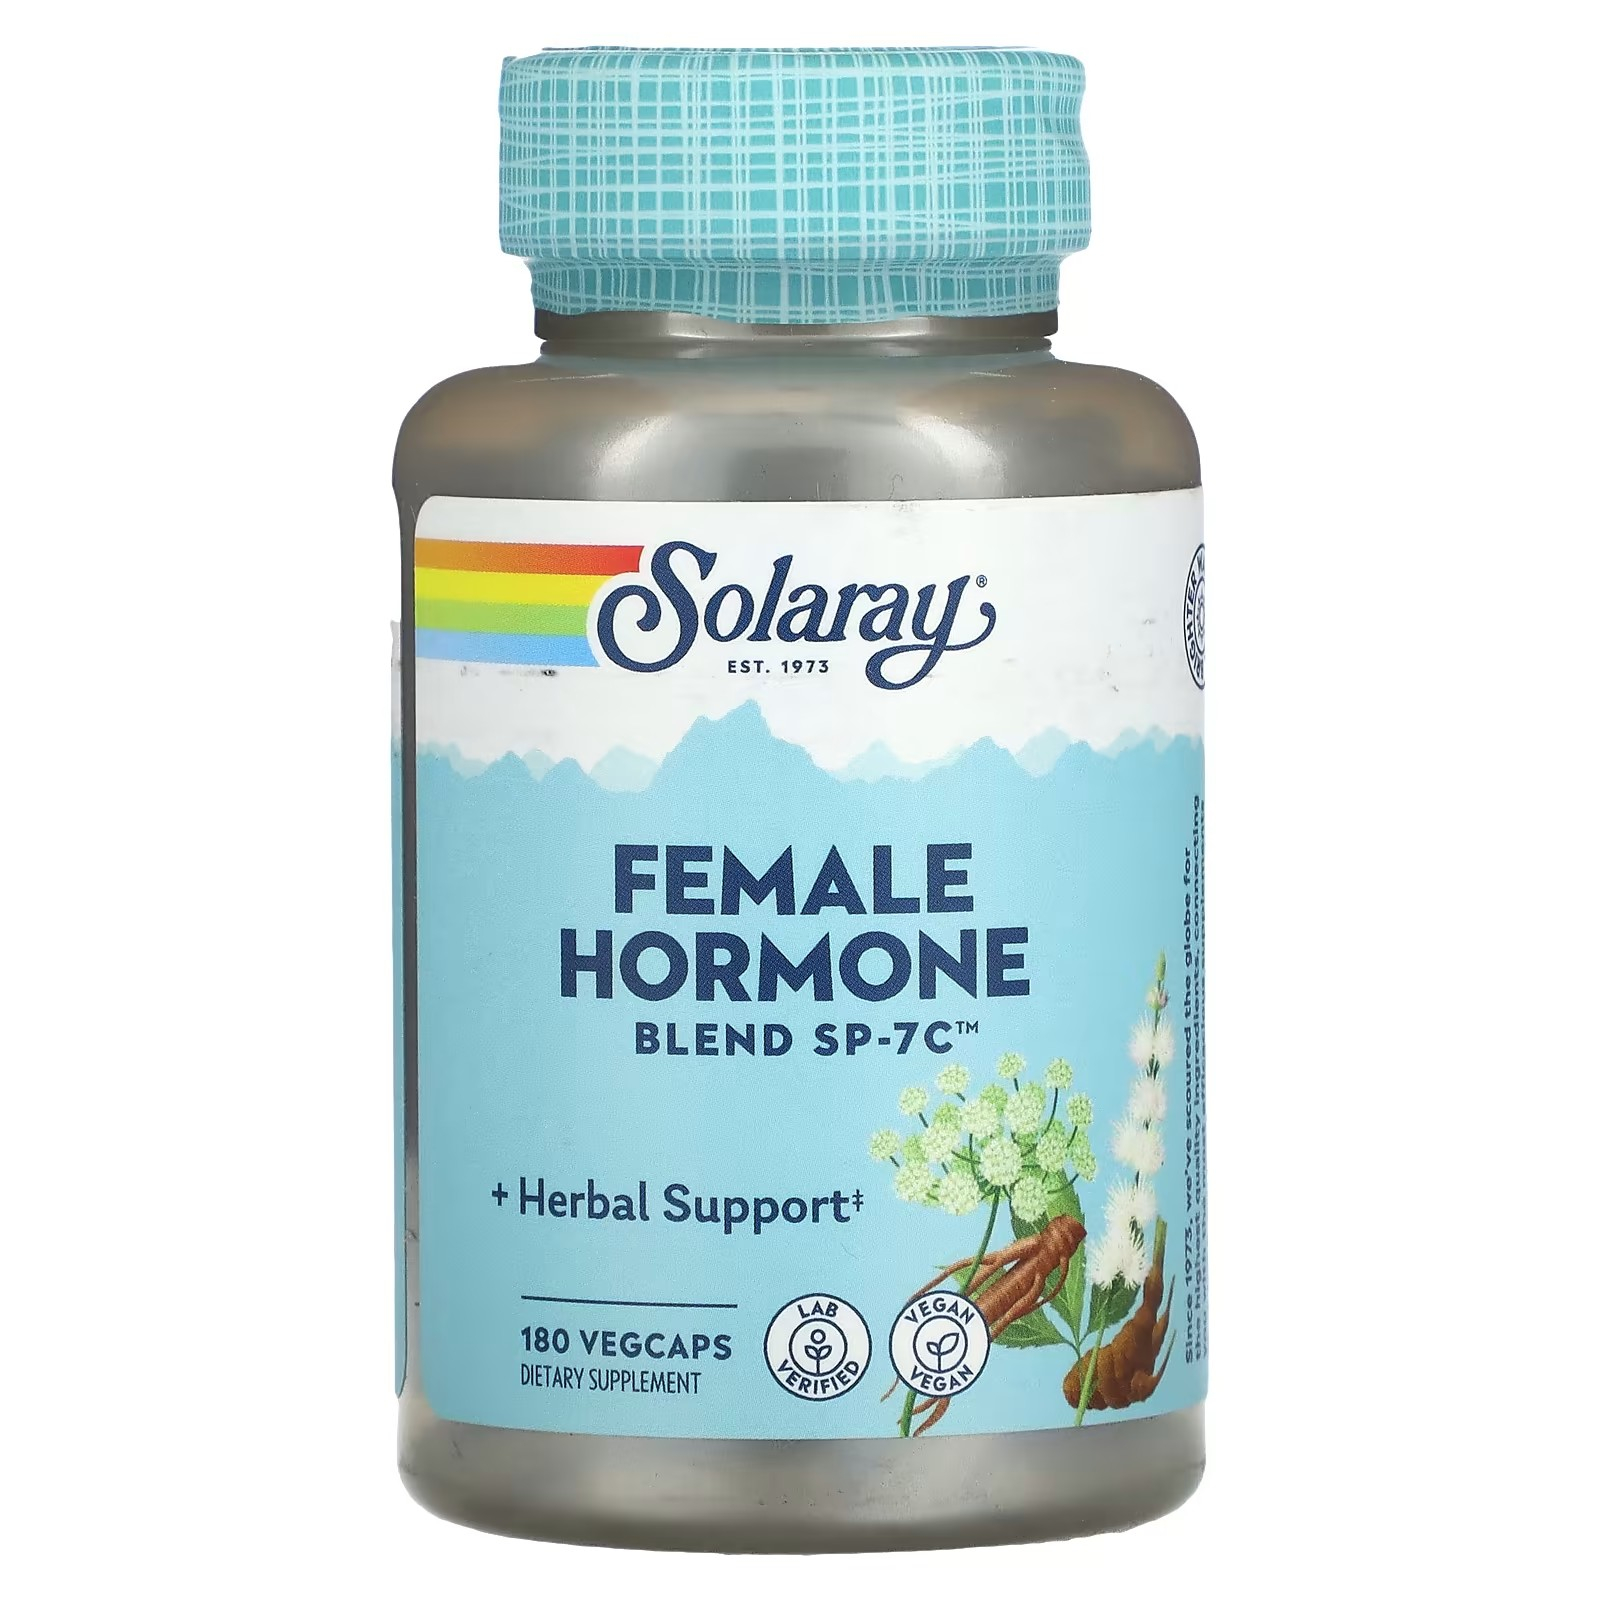 solaray-female-hormone-blend-sp-7c-180-vegcaps-no-3117